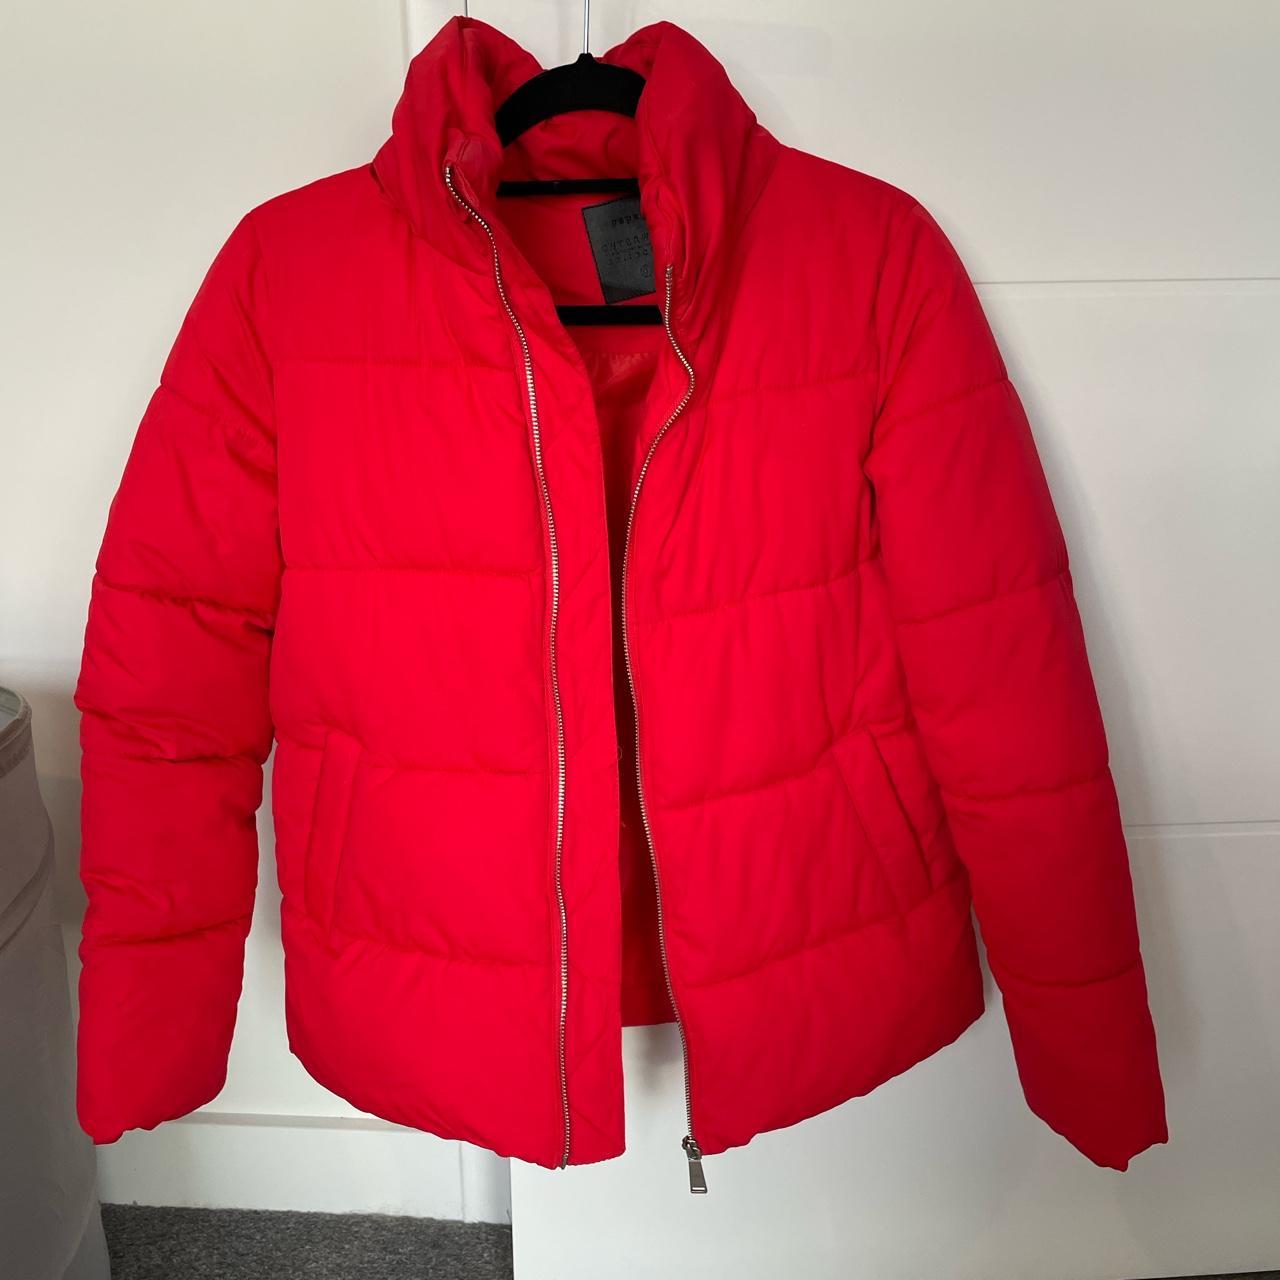 Matalan Red Puffer Coat Size UK 6 - can fit a UK... - Depop